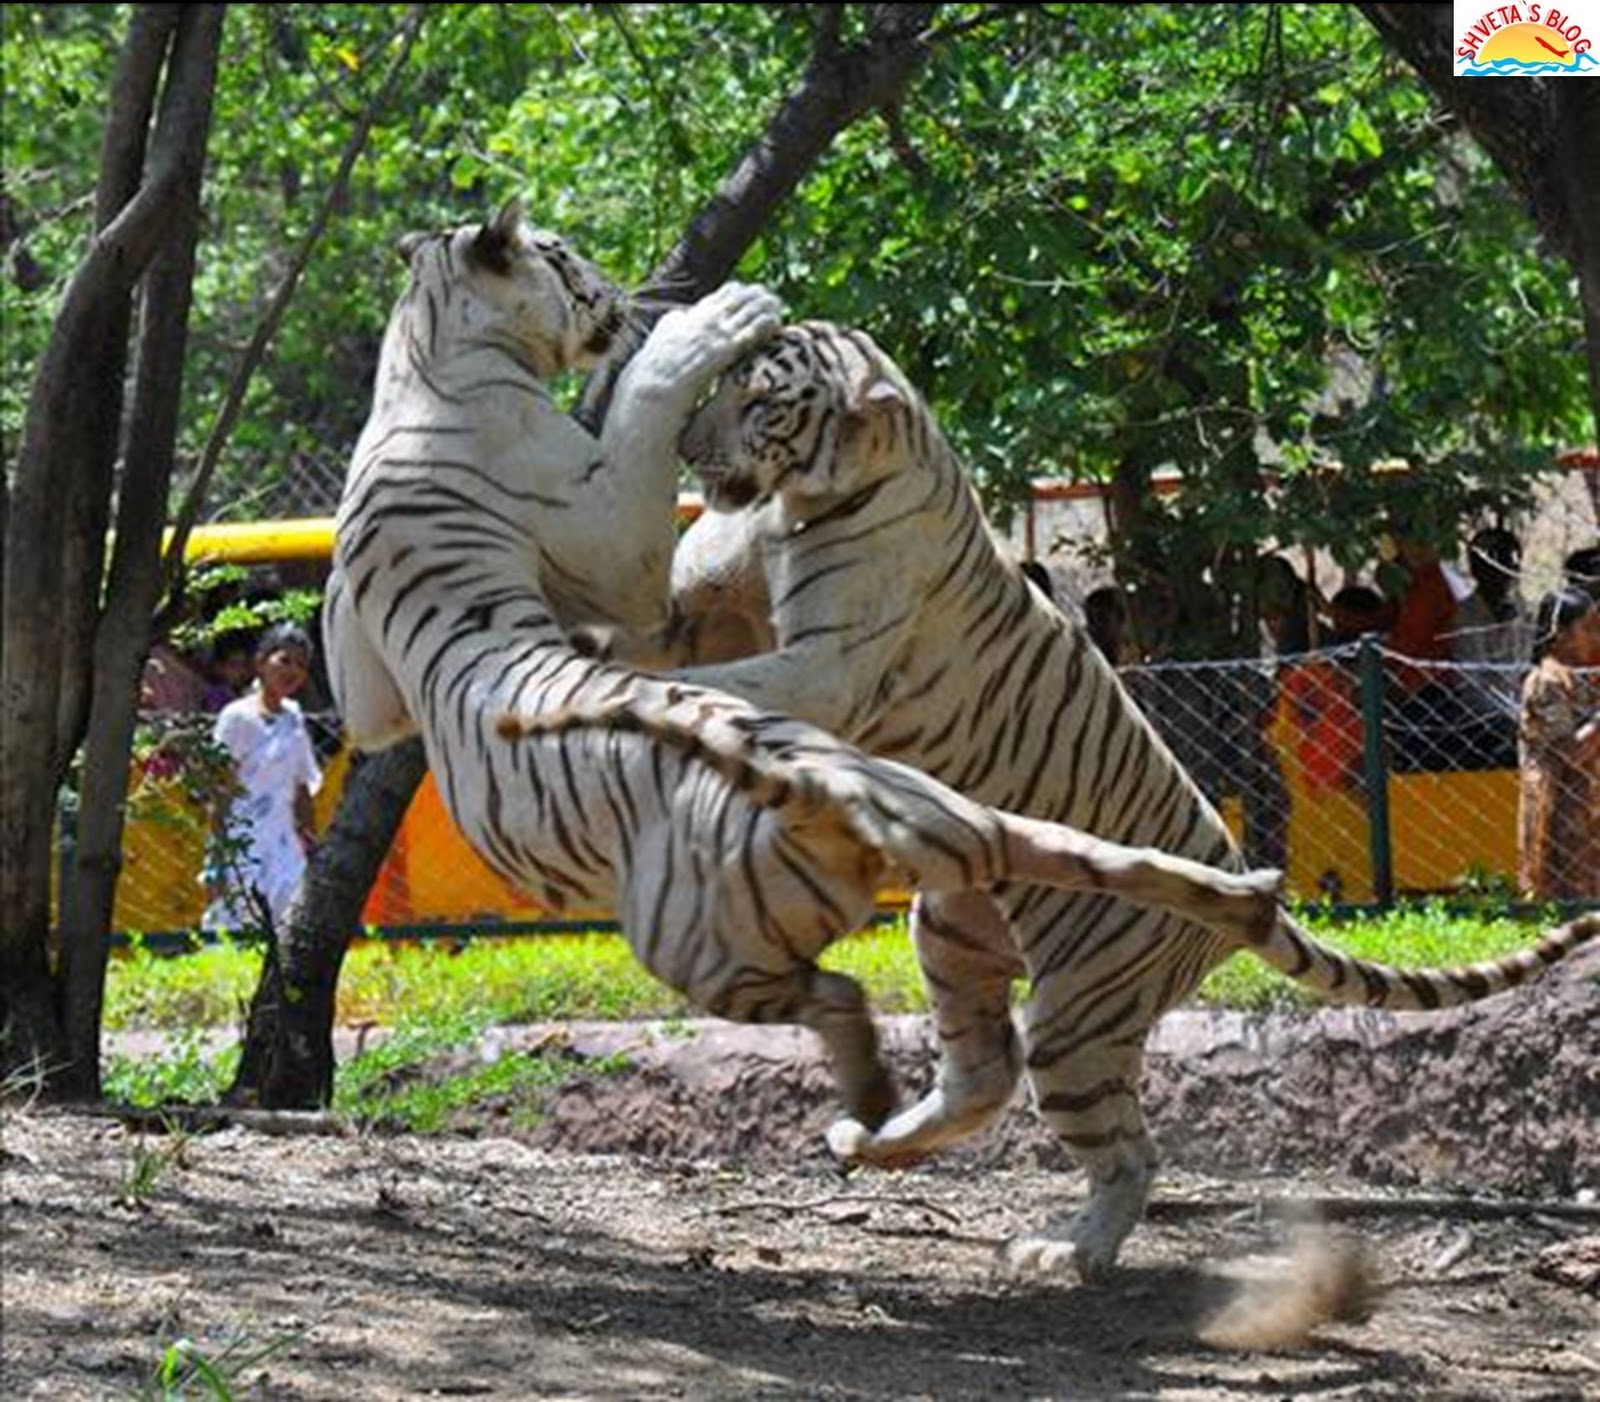 essay on nehru zoological park